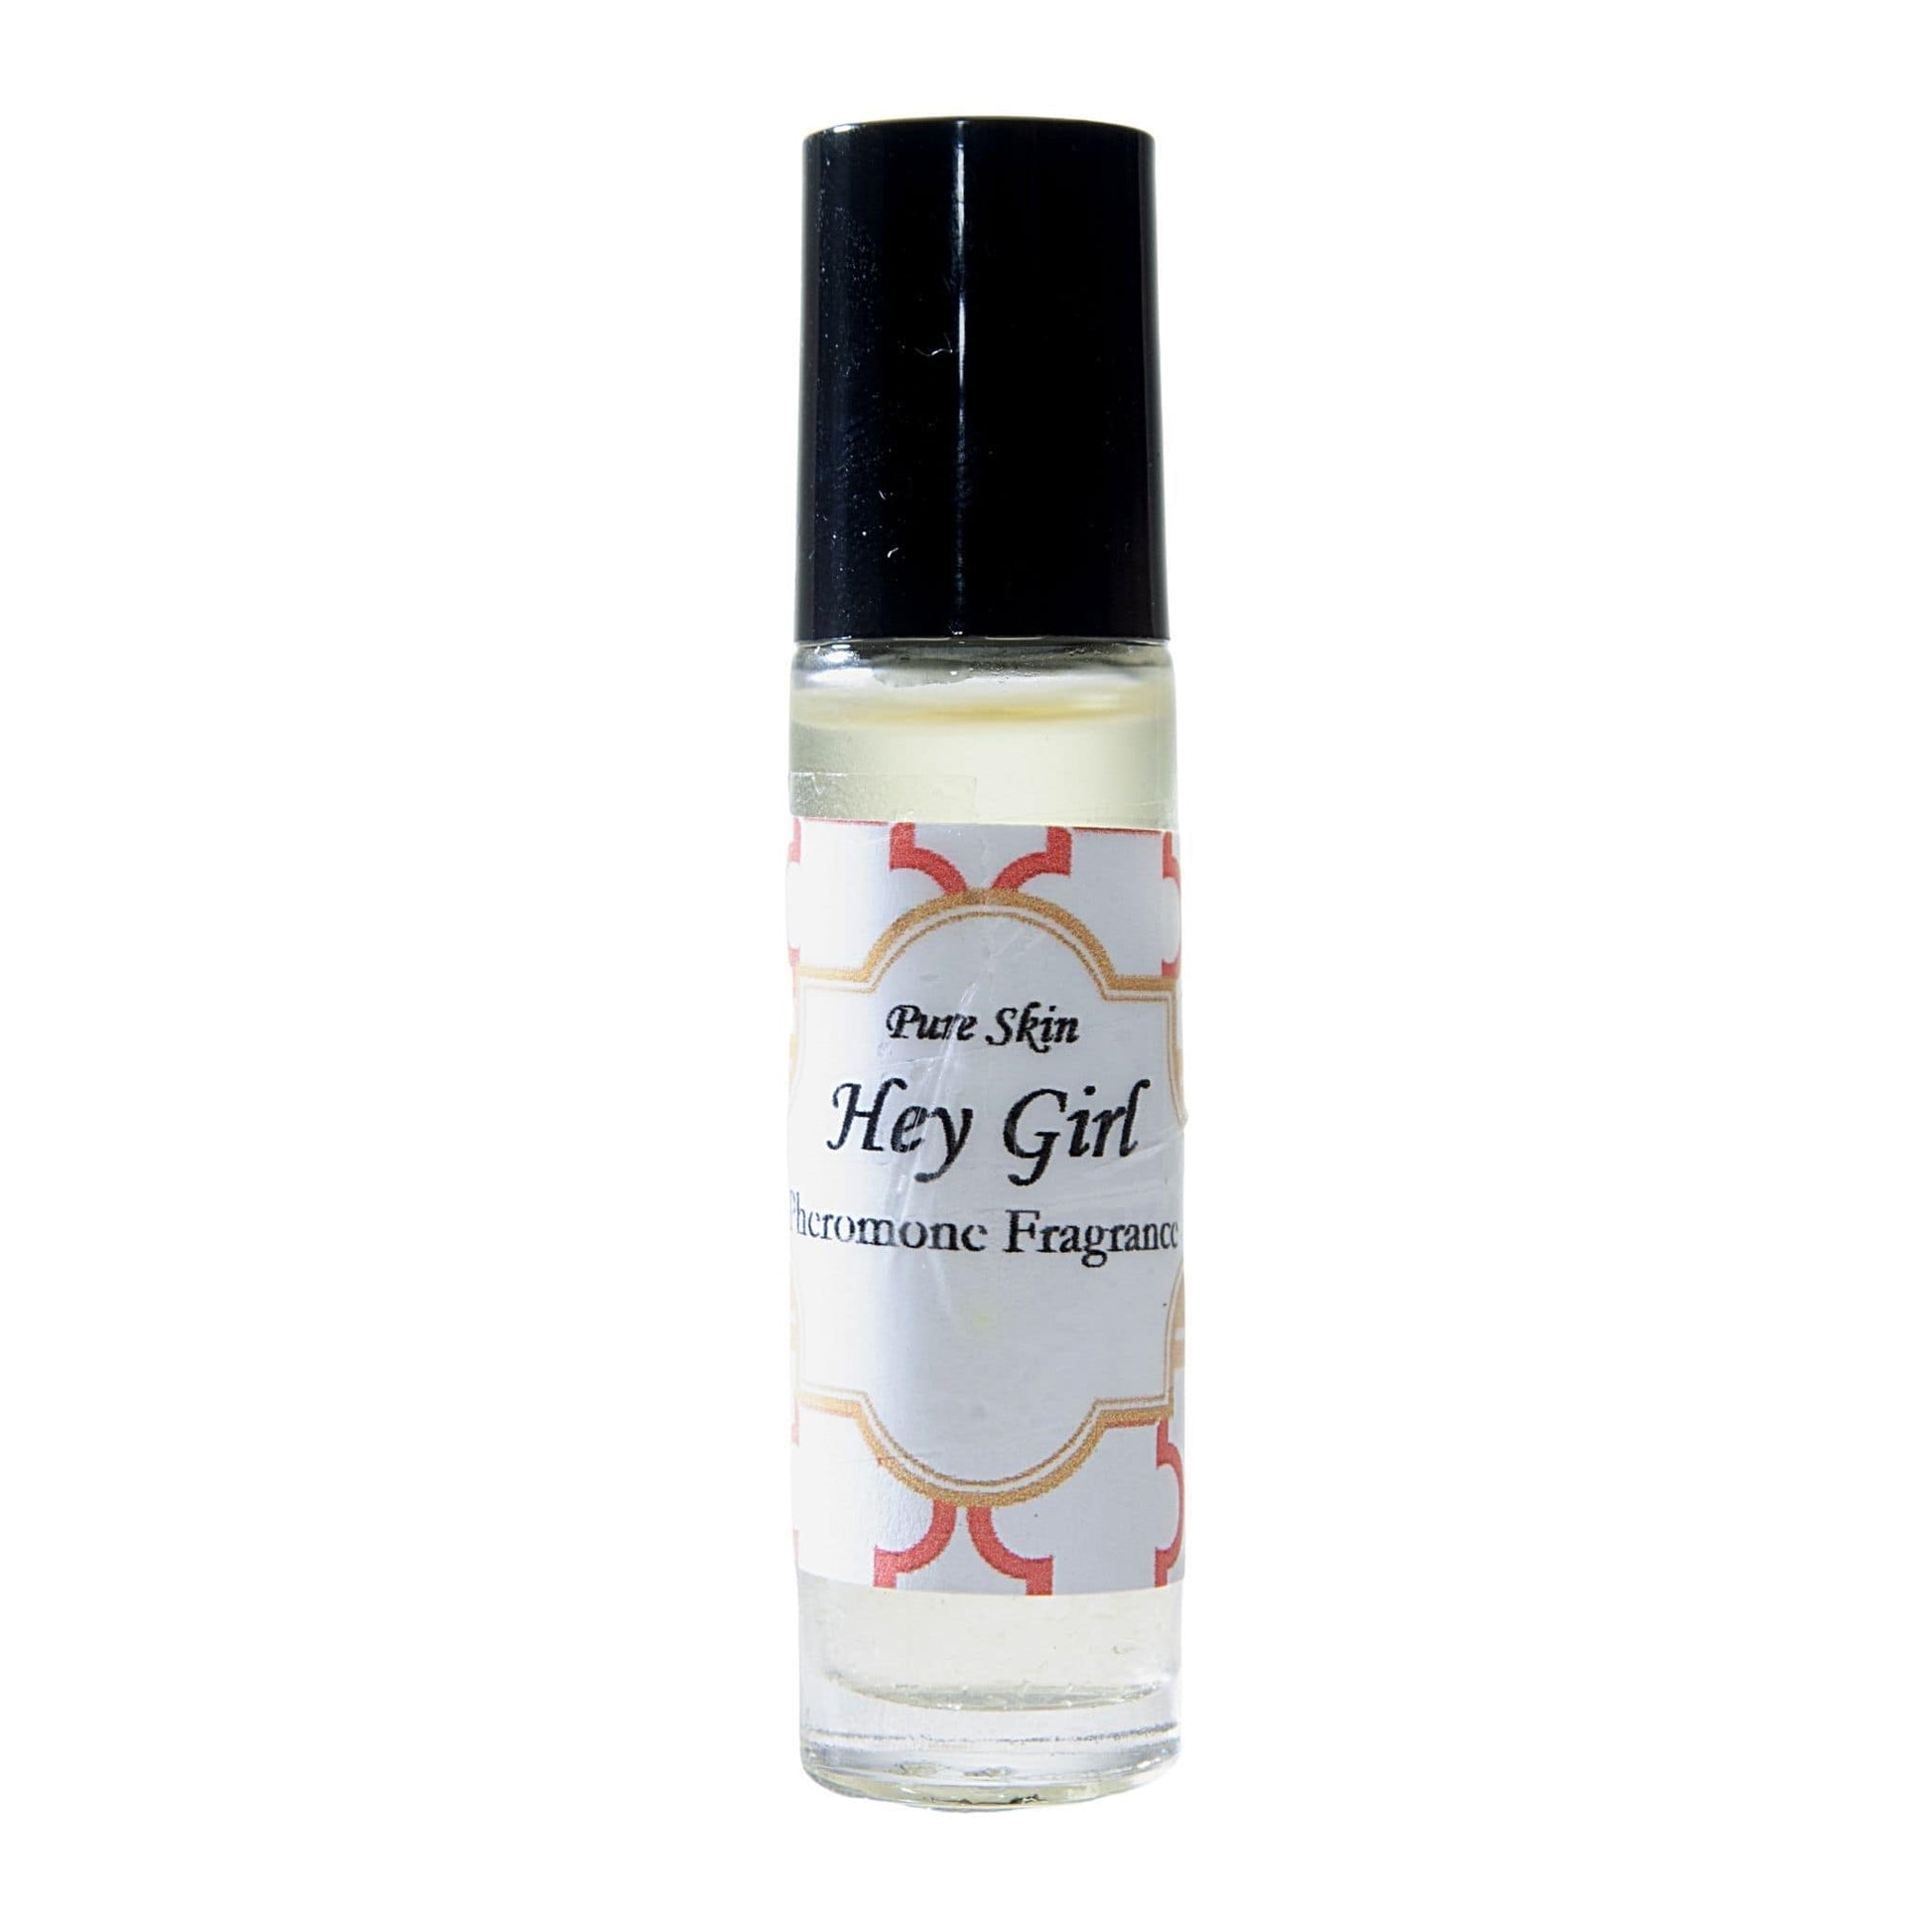 Pure Skin Pheromone Enhancing Fragrances